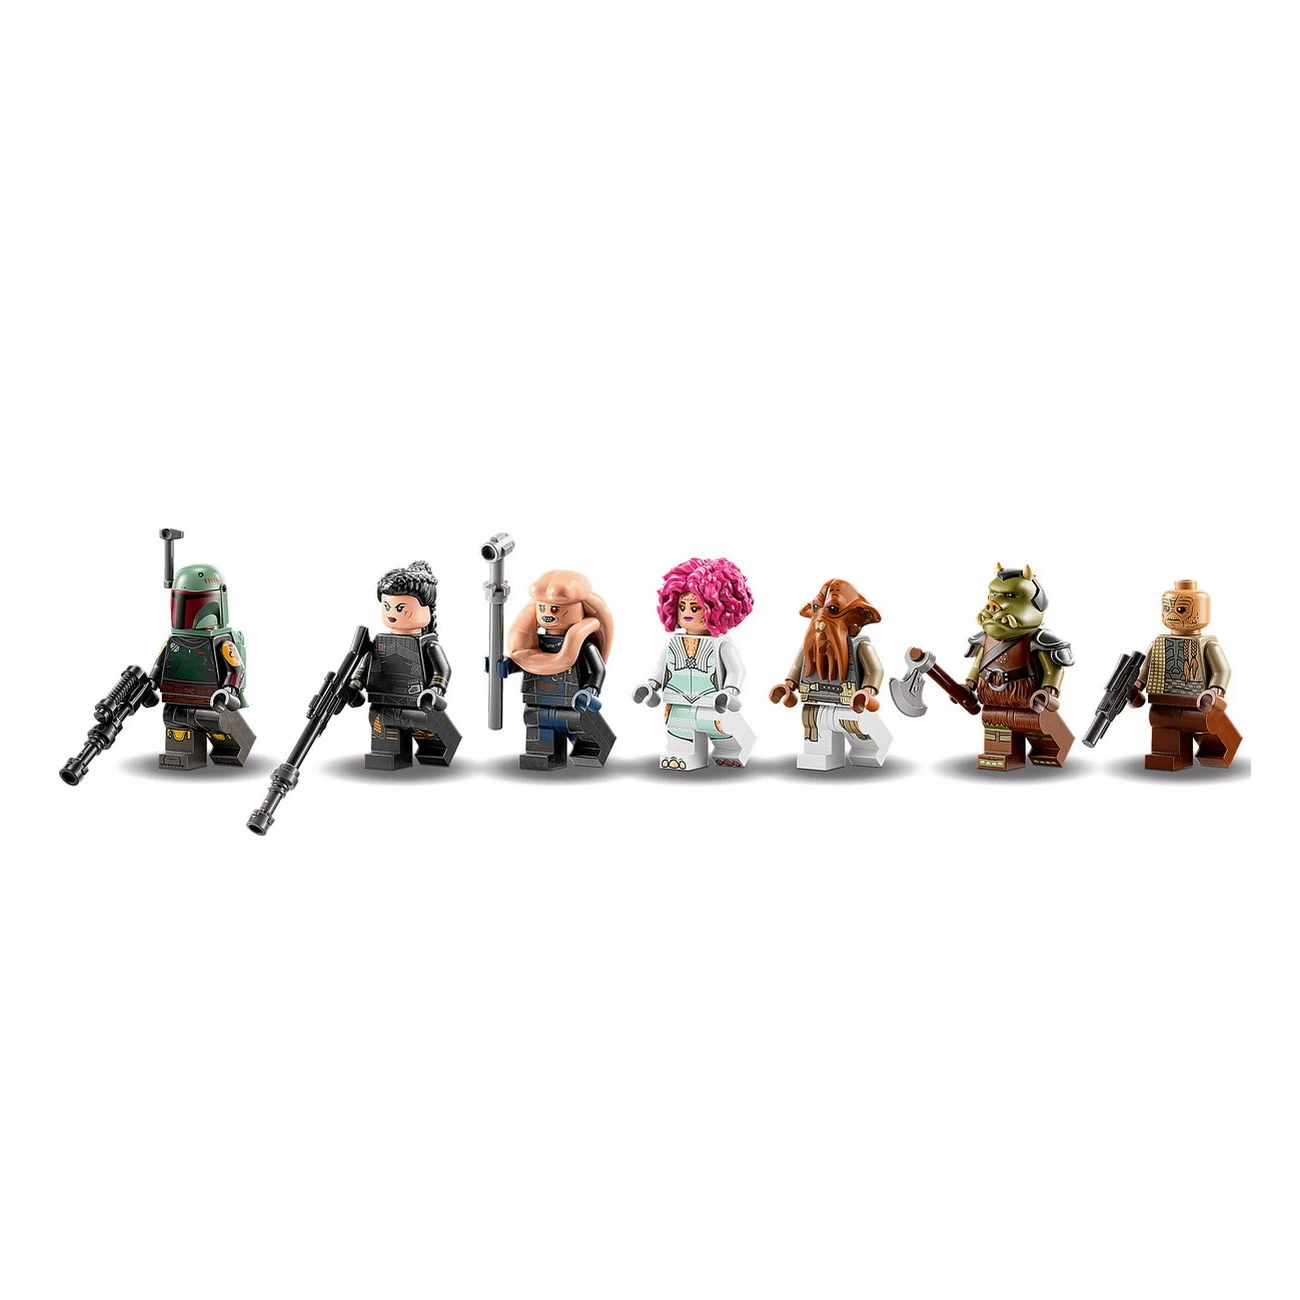 LEGO Star Wars 75326 - Boba Fetts Thronsaal